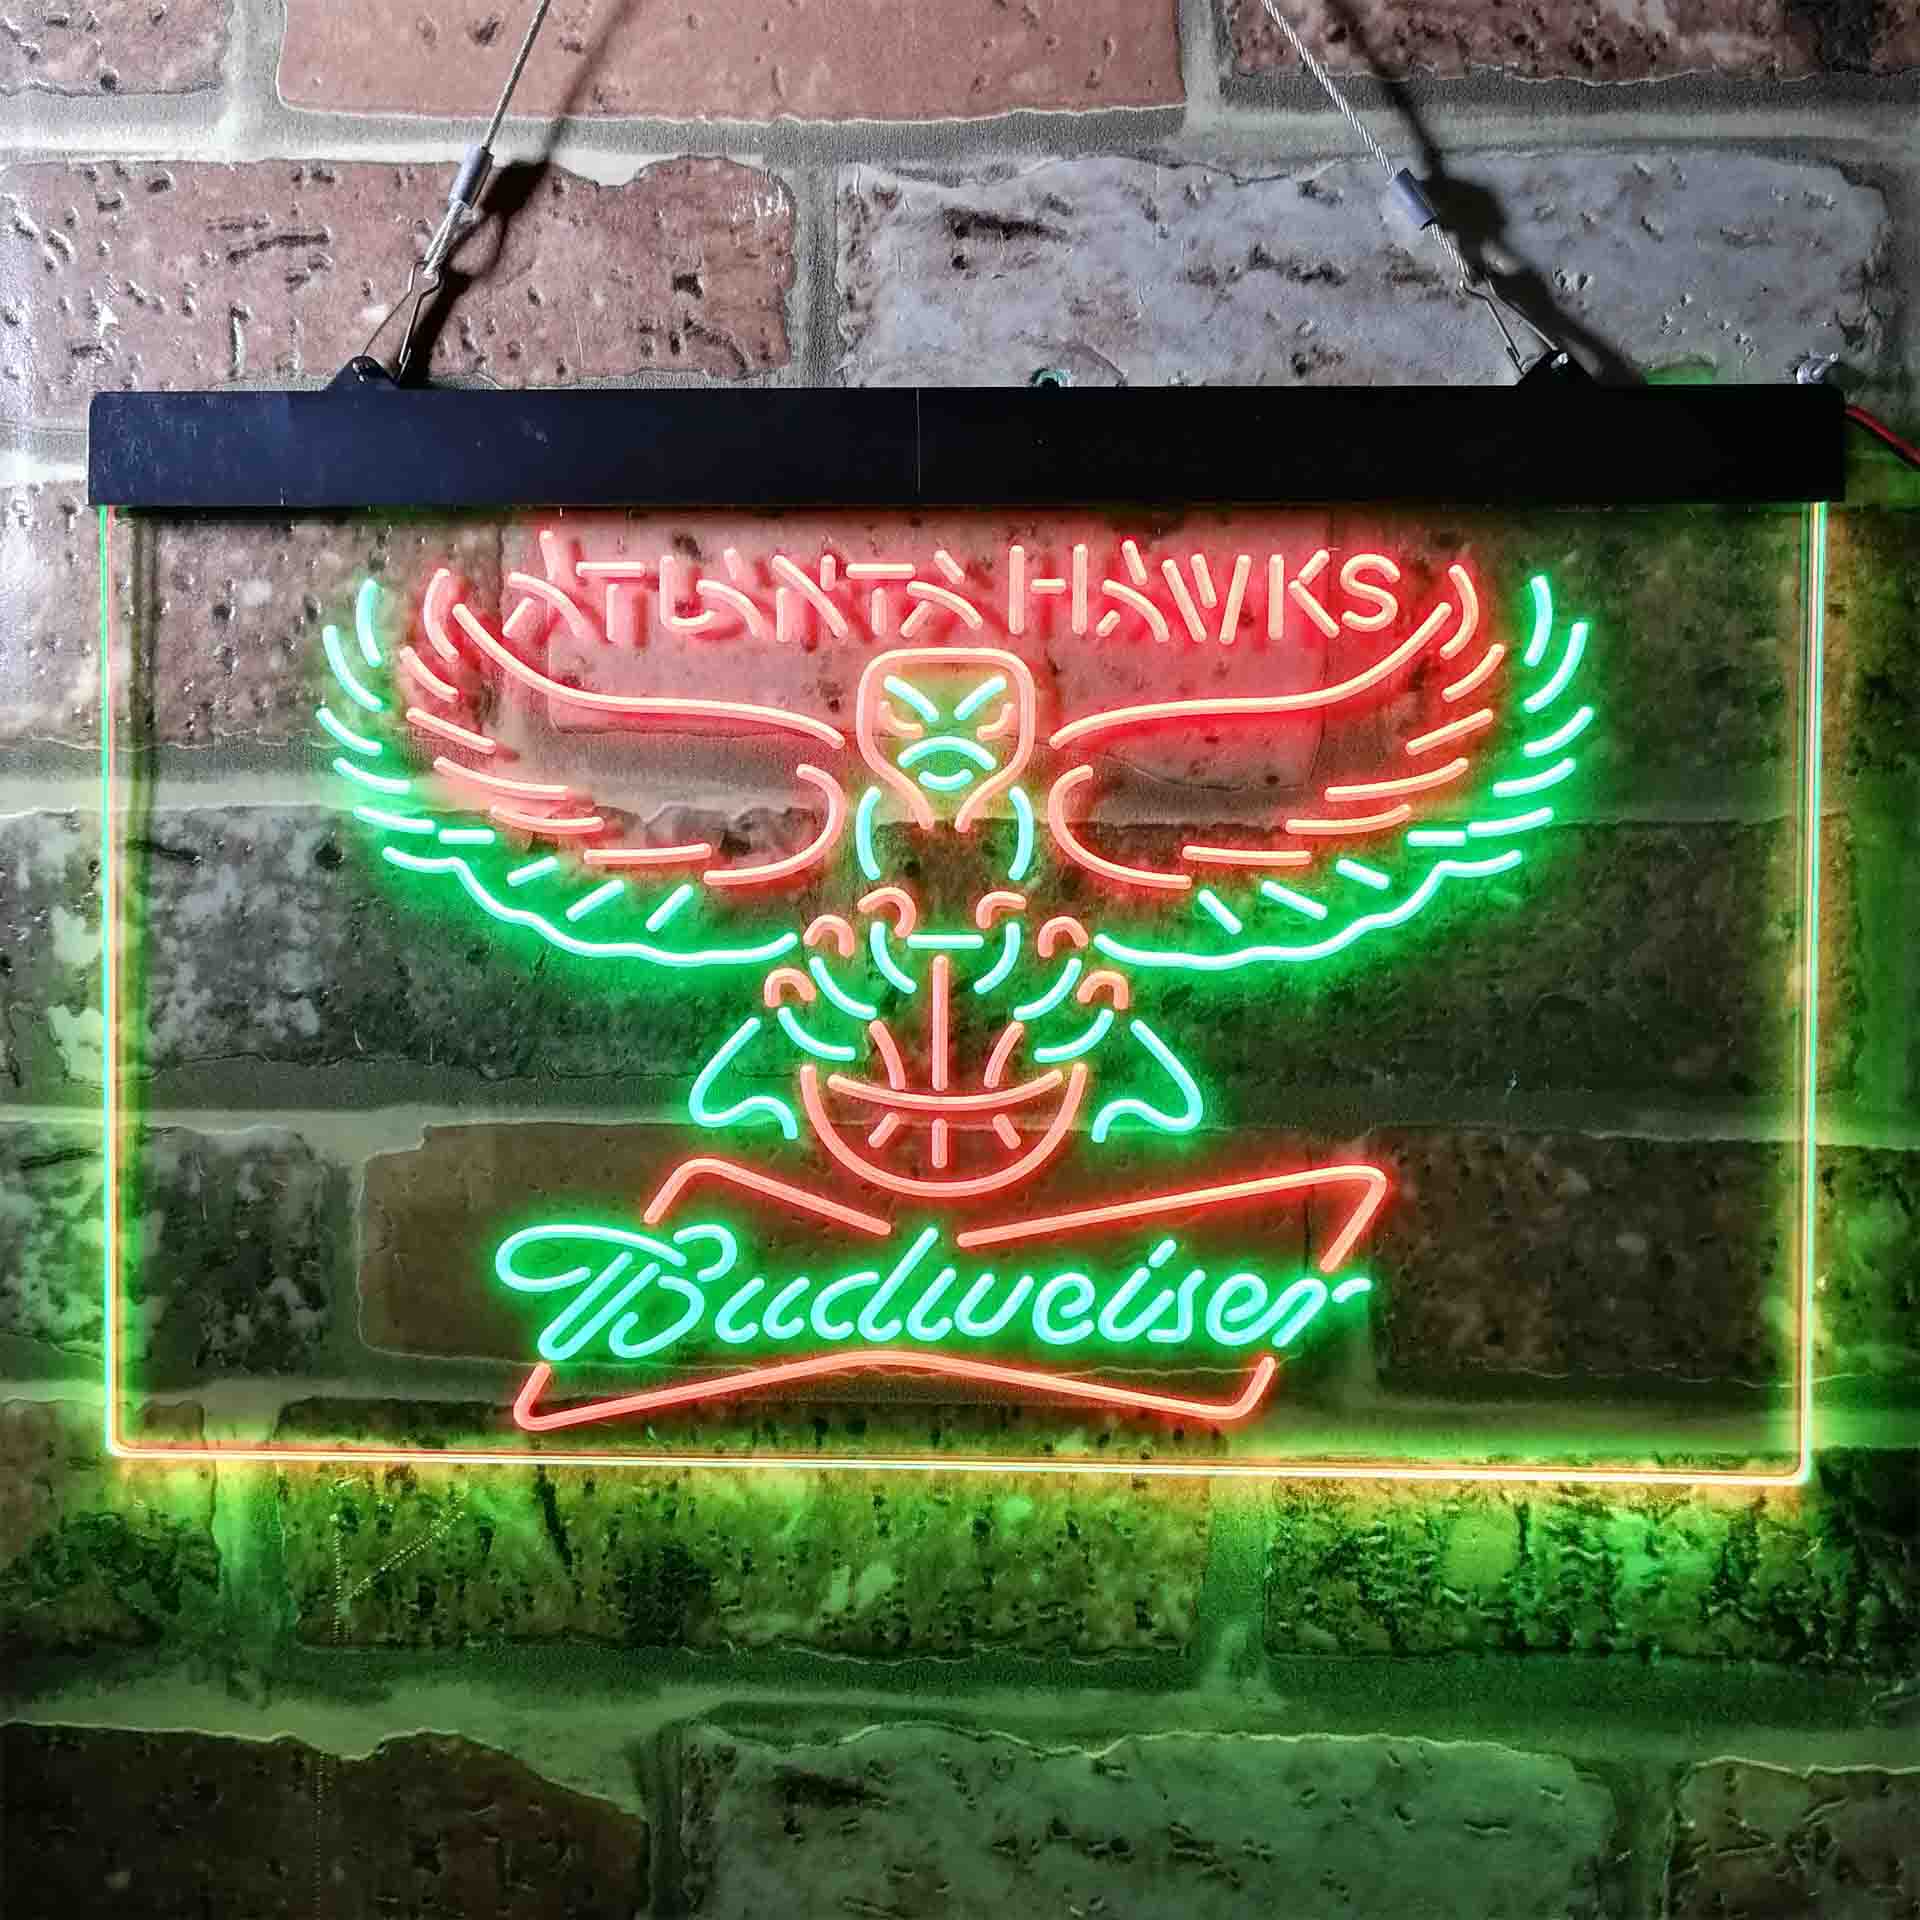 Atlanta Hawks Budweiser Neon-Like LED Sign